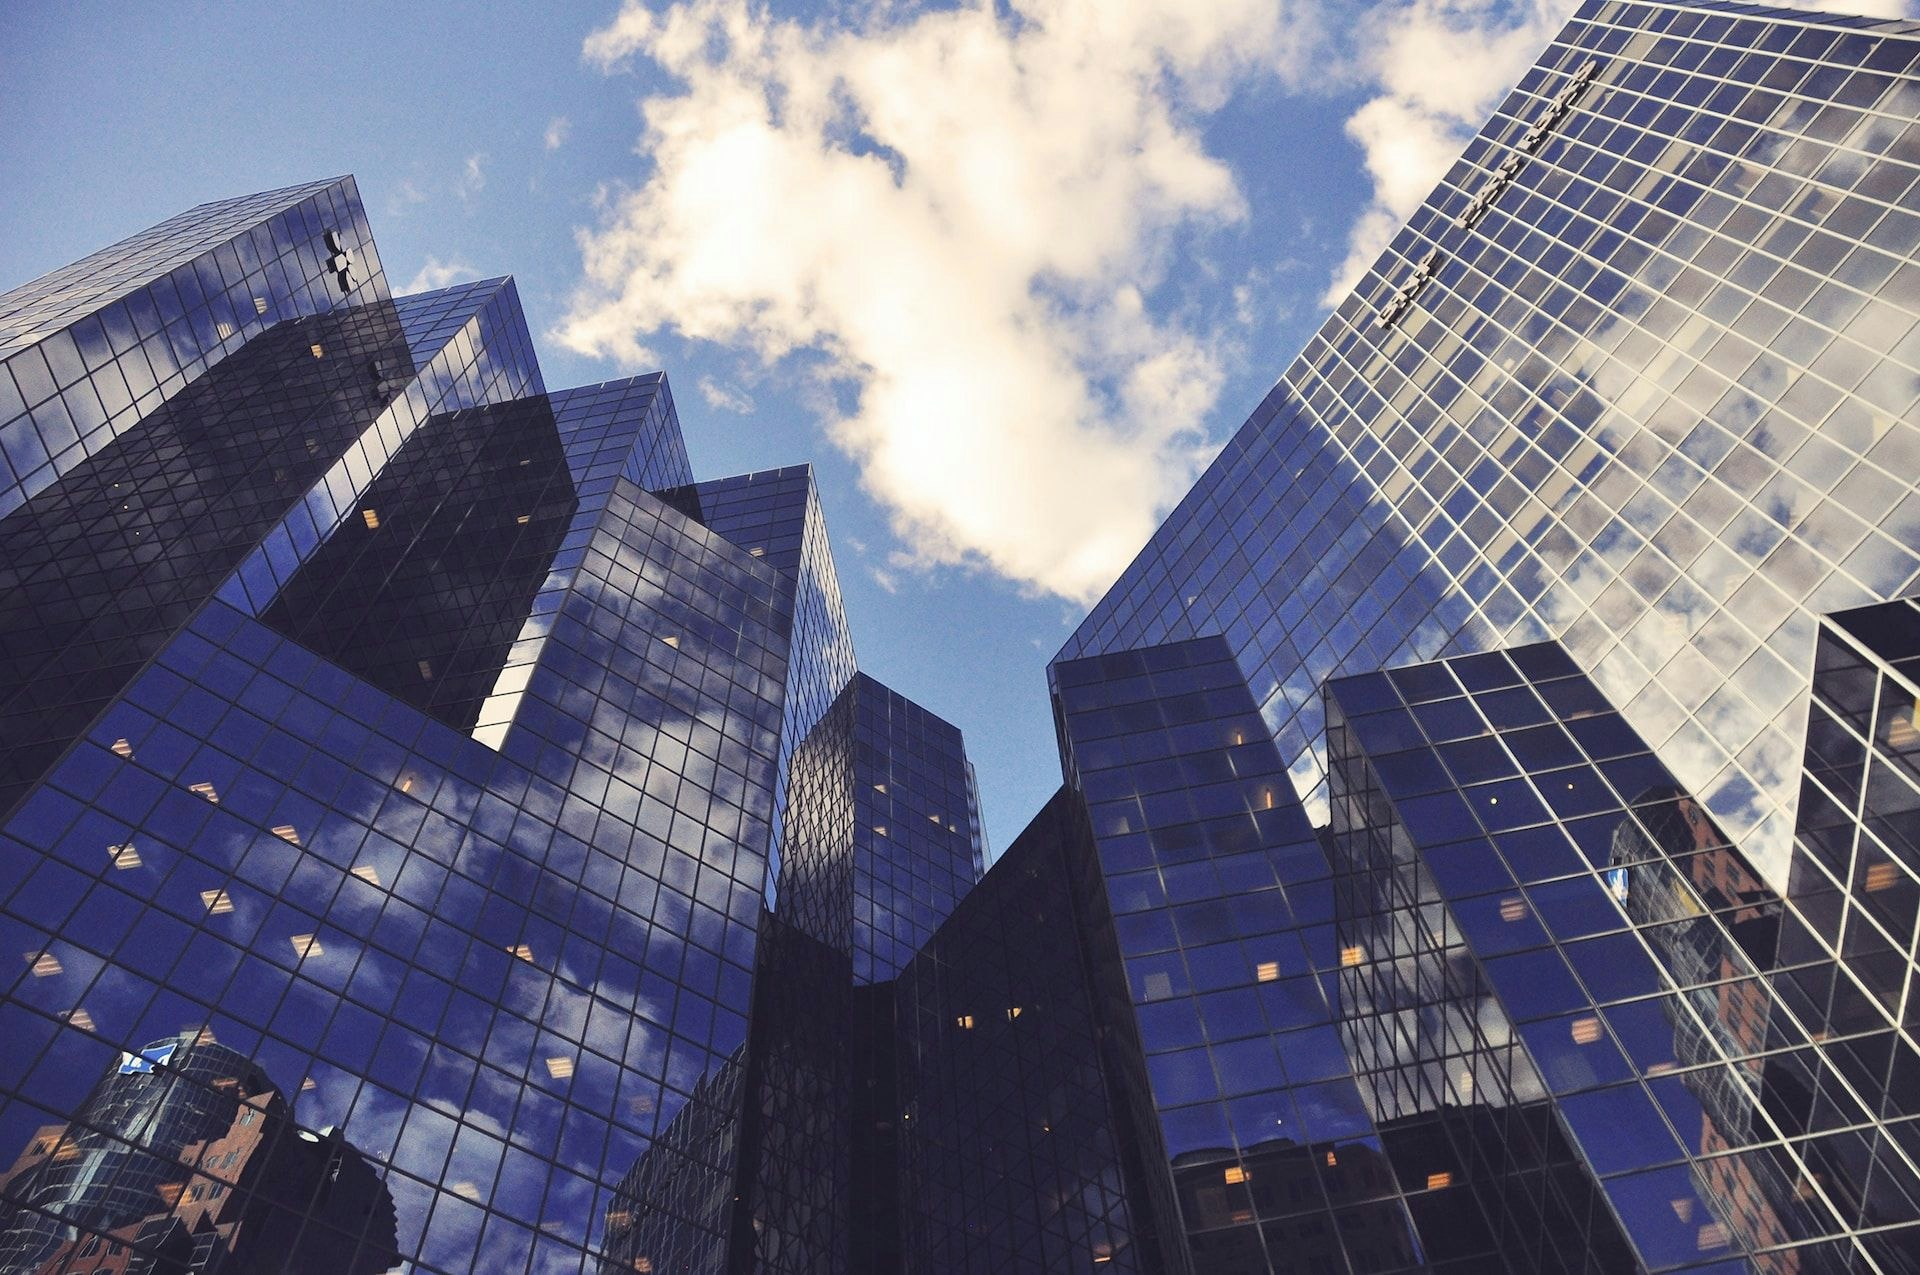 tall glass office buildings against blue sky